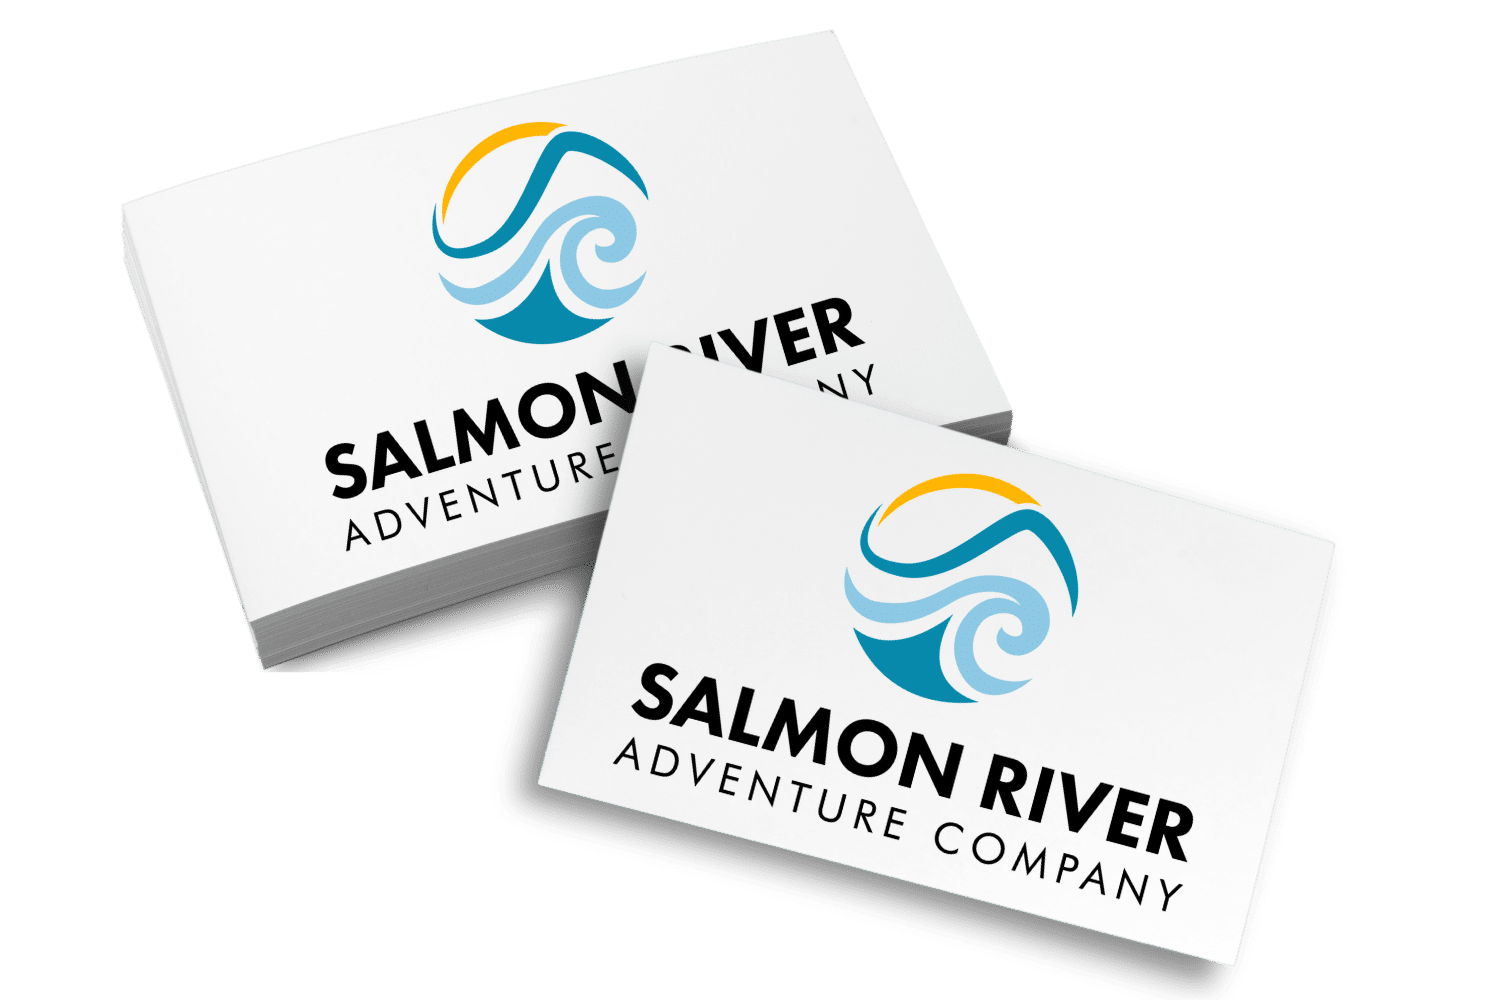 Salmon River business cards mockup brand portfolio and logo design